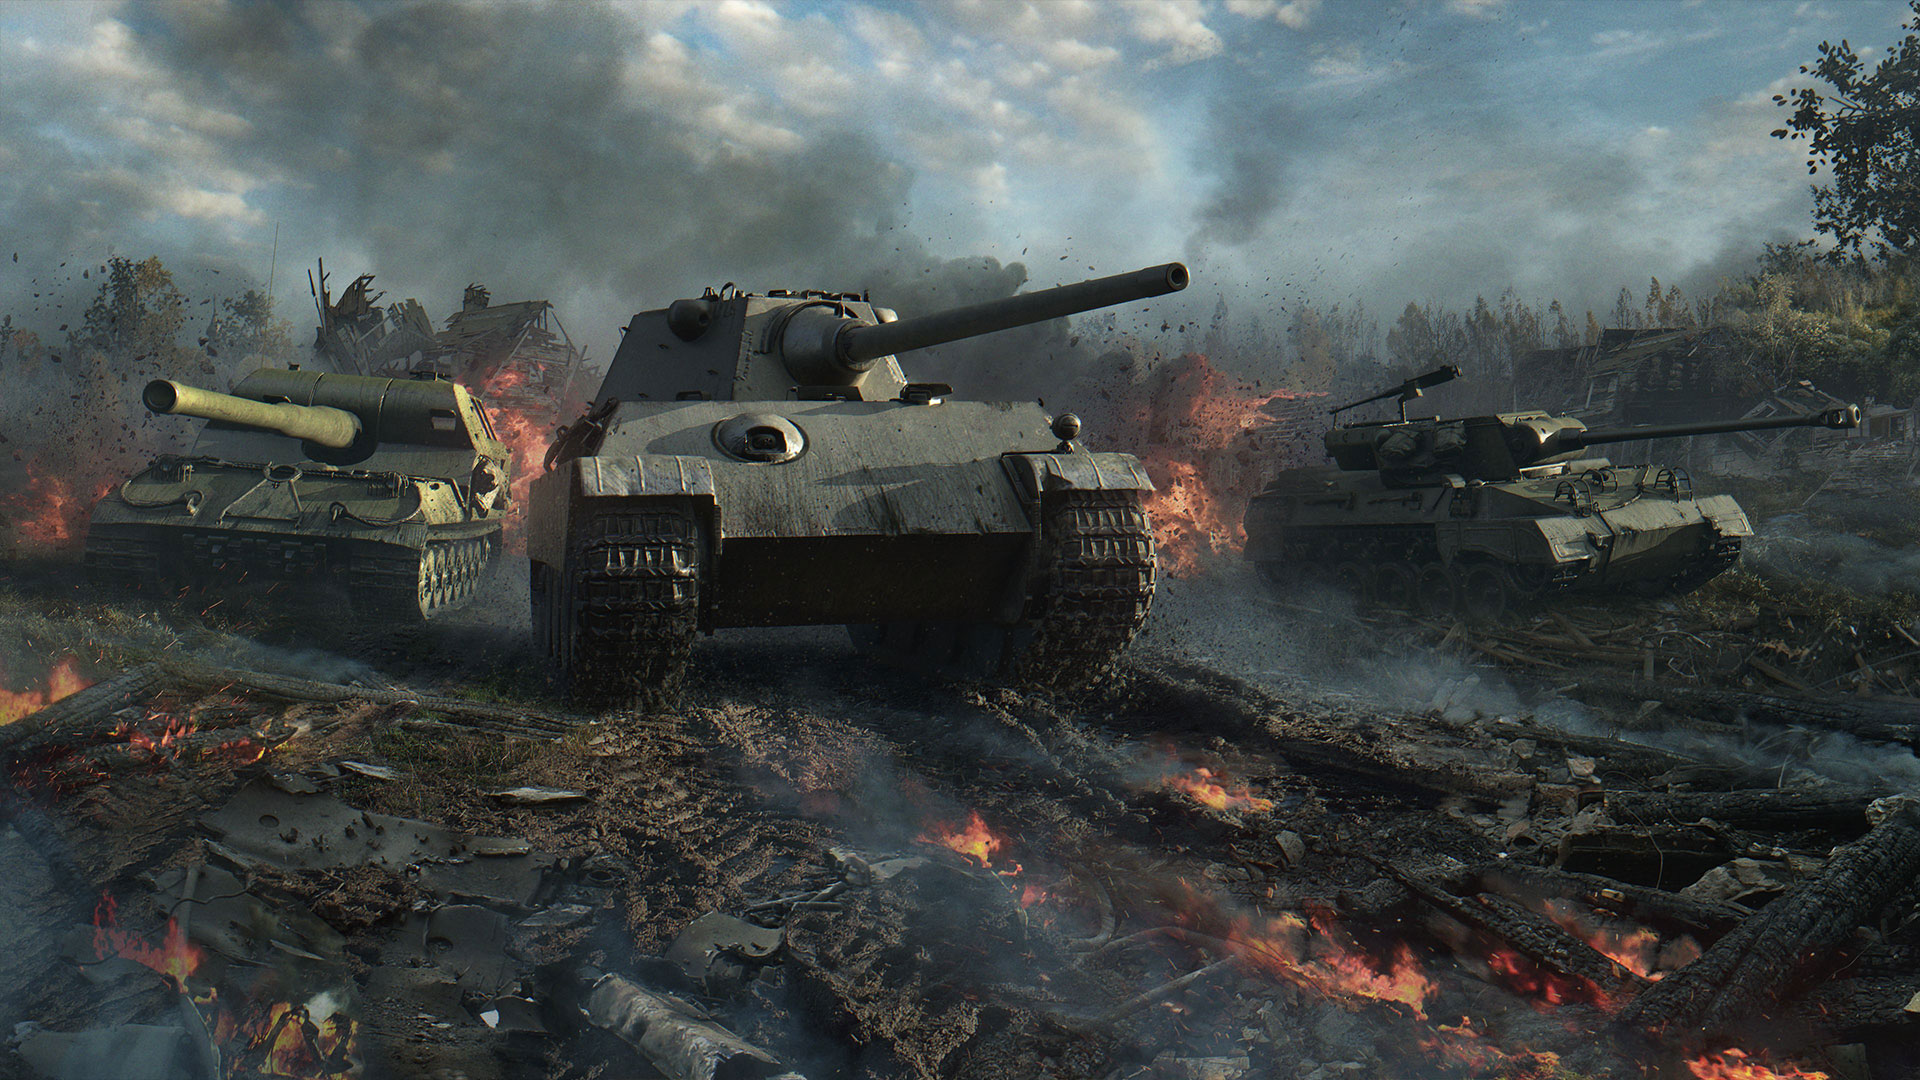 Wargaming Seattle Developer of Free-to-Play Game World of Tanks Shuts Down